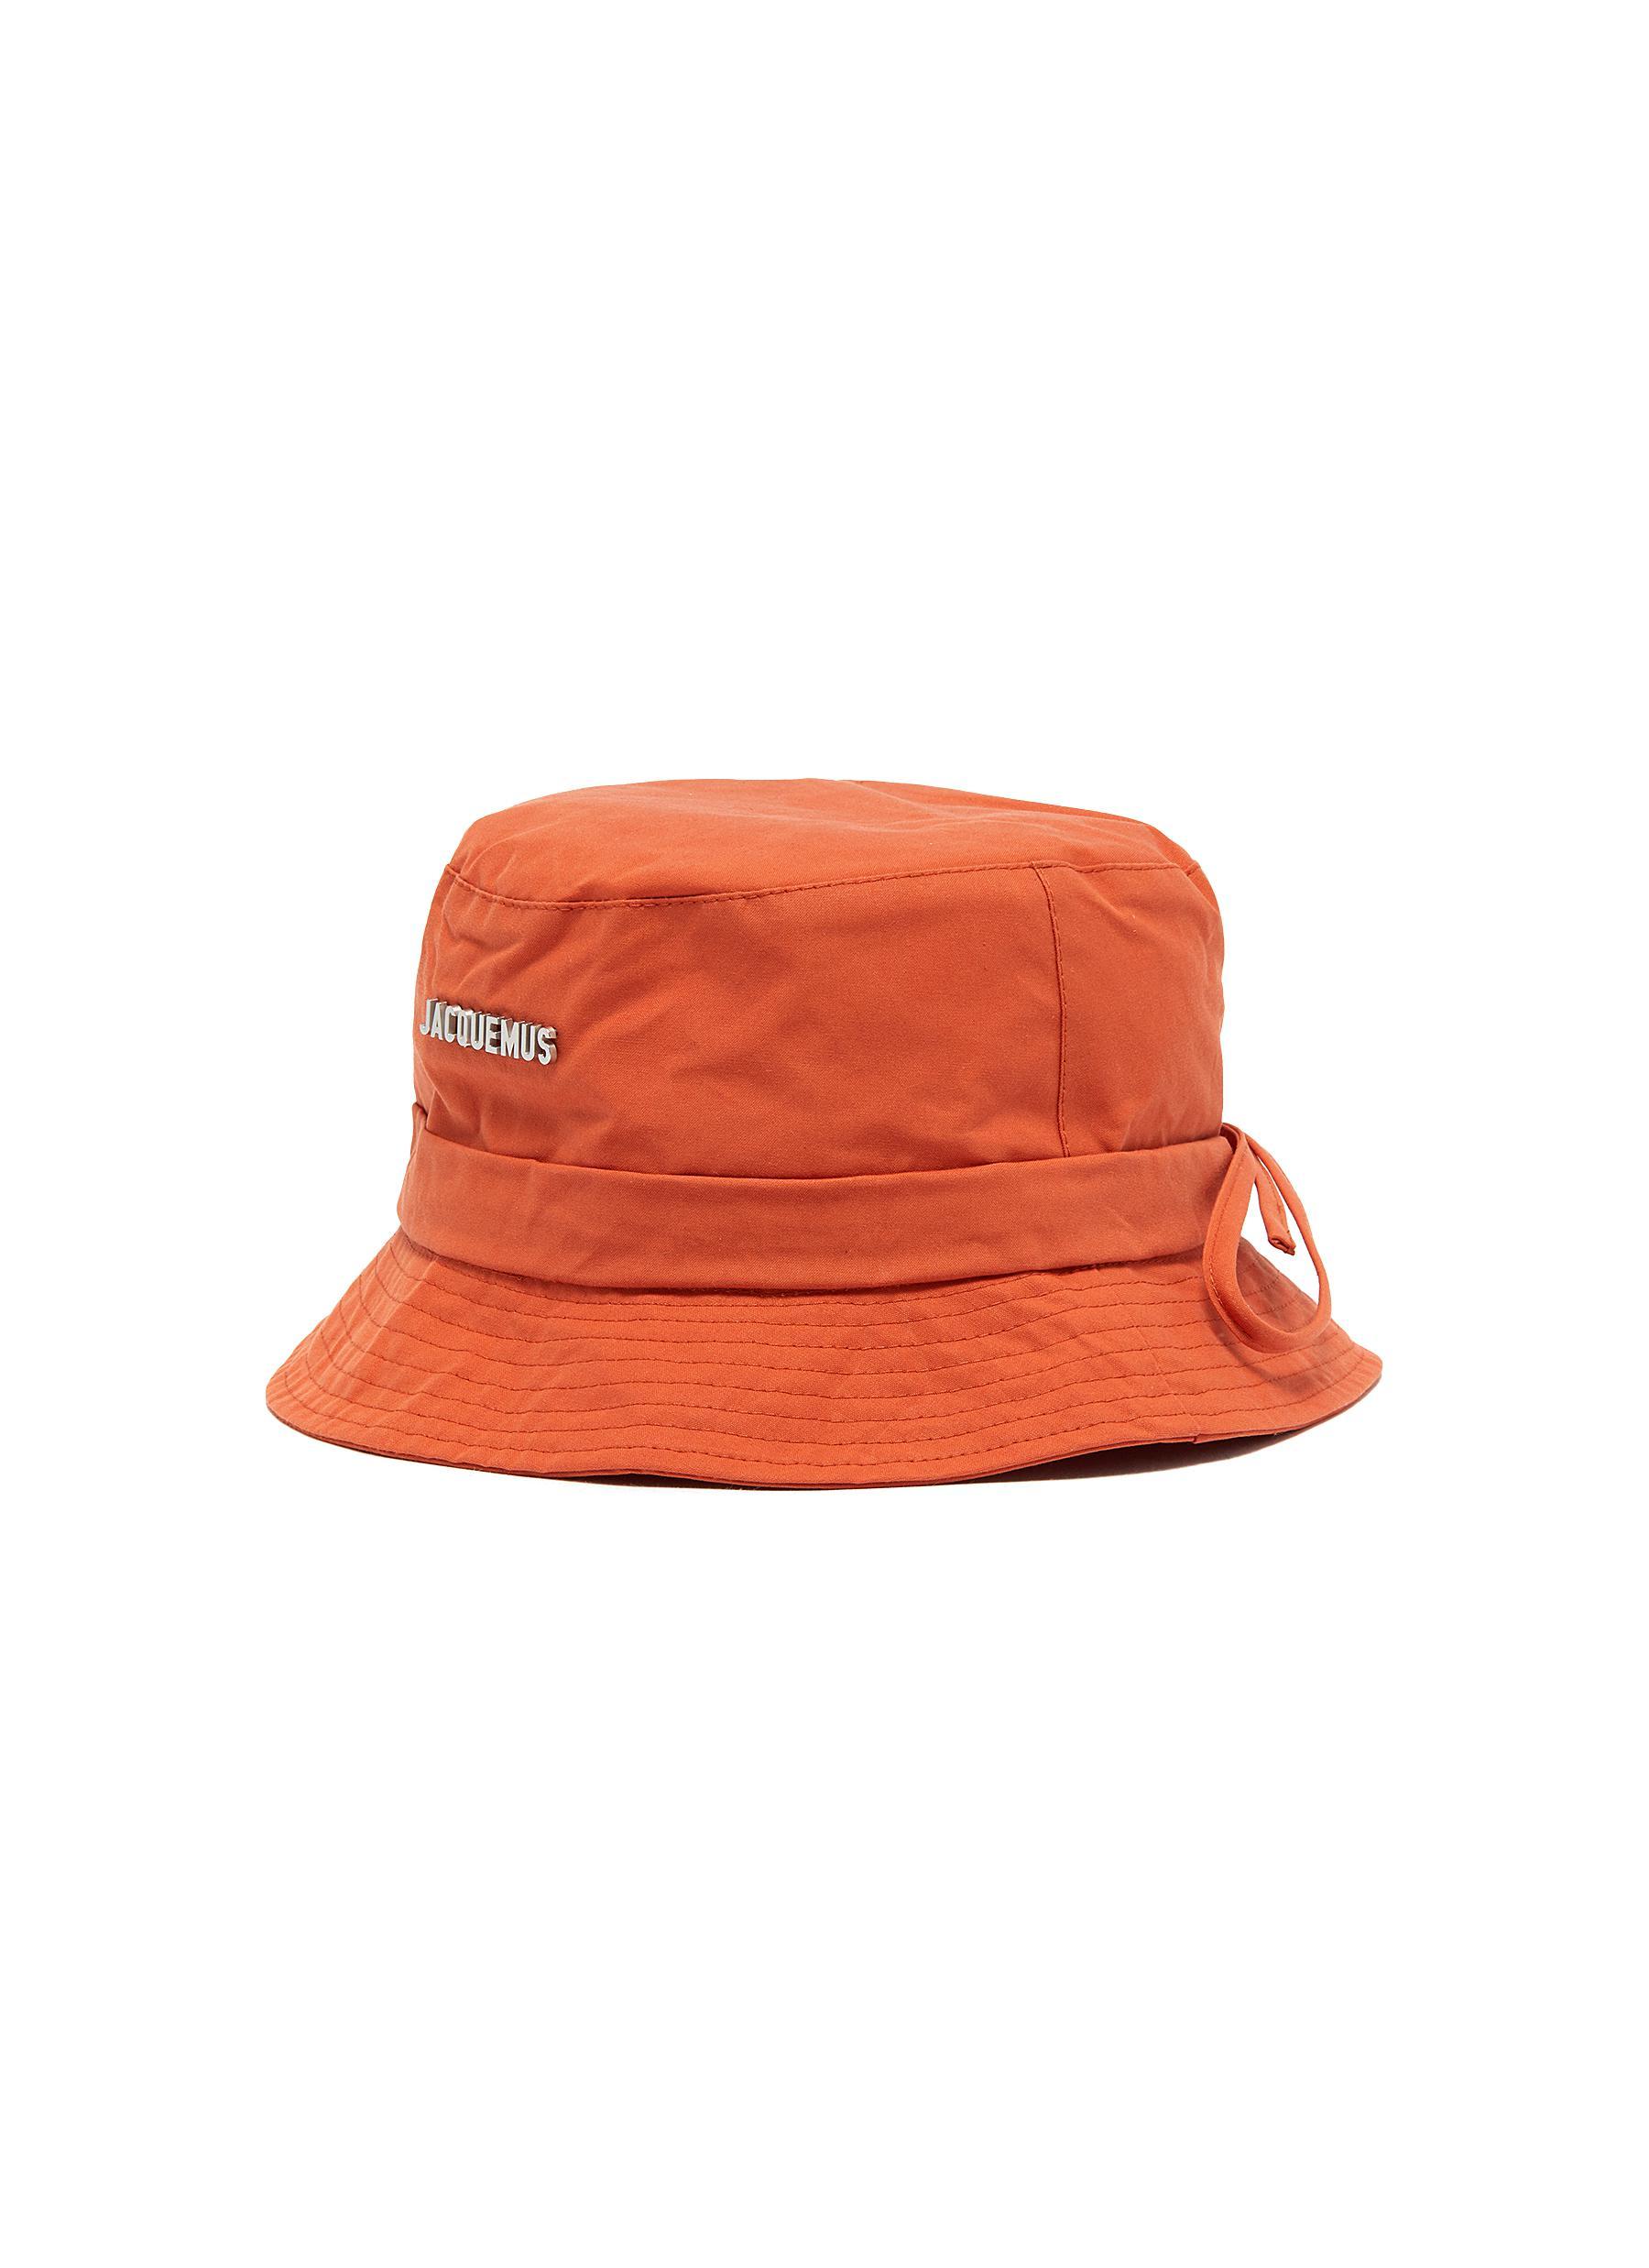 Jacquemus Le Bob Gadjo' Canvas Bucket Hat in Orange | Lyst